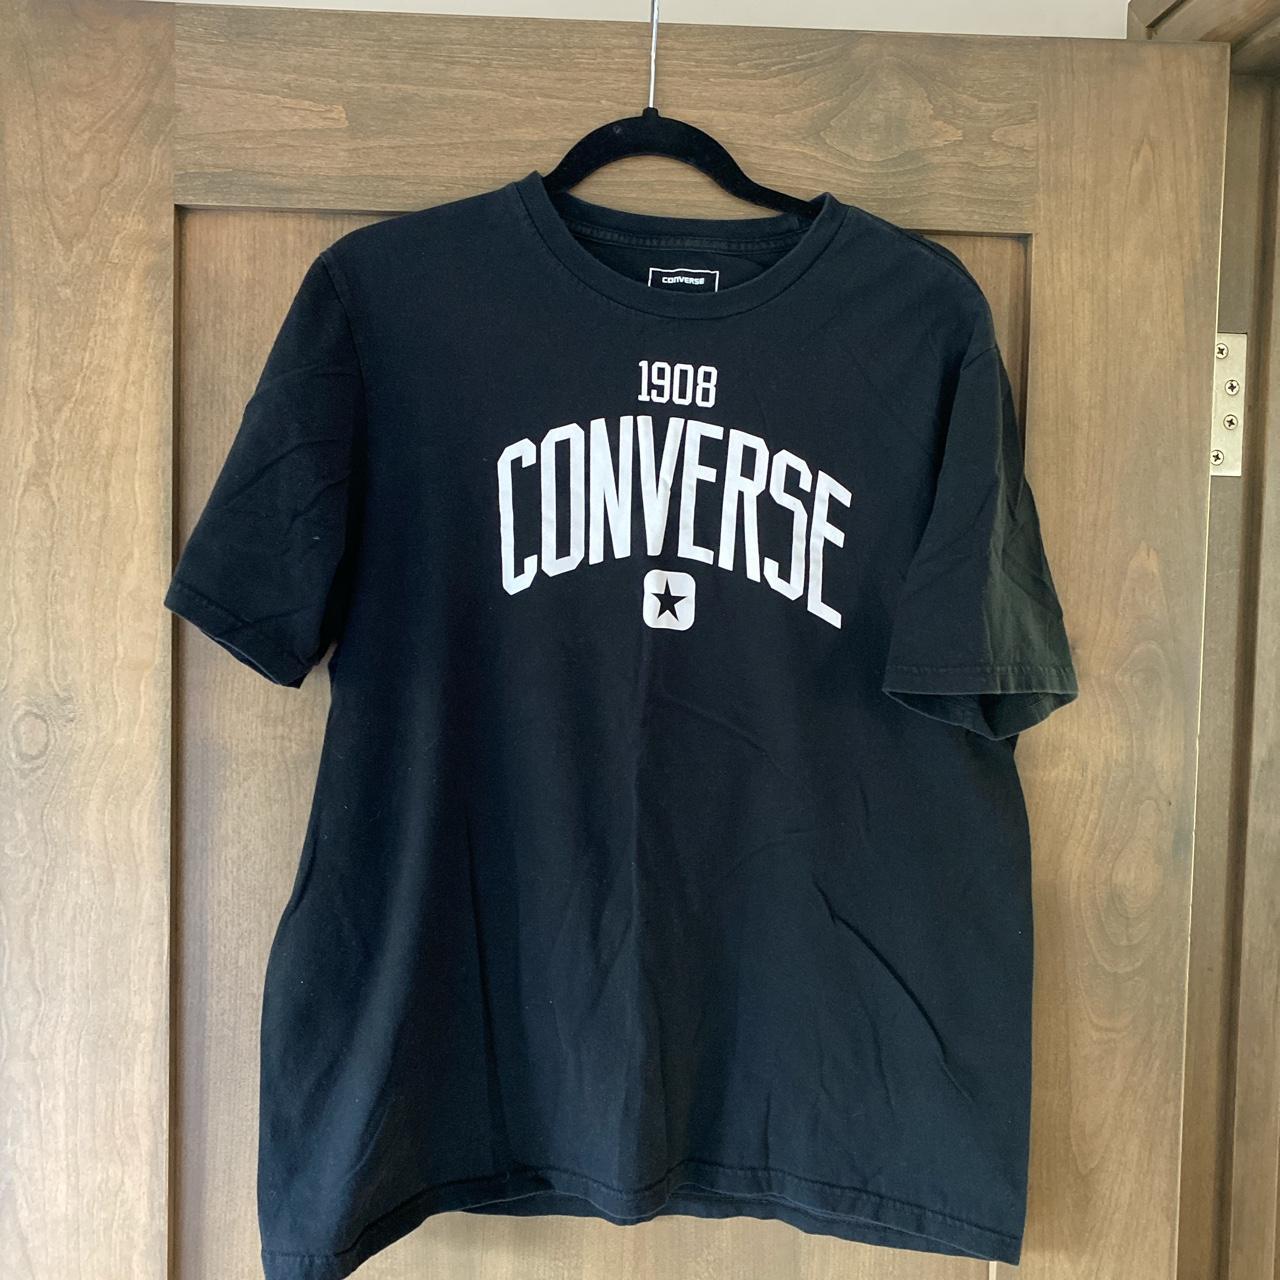 Converse Men's Black and White T-shirt | Depop